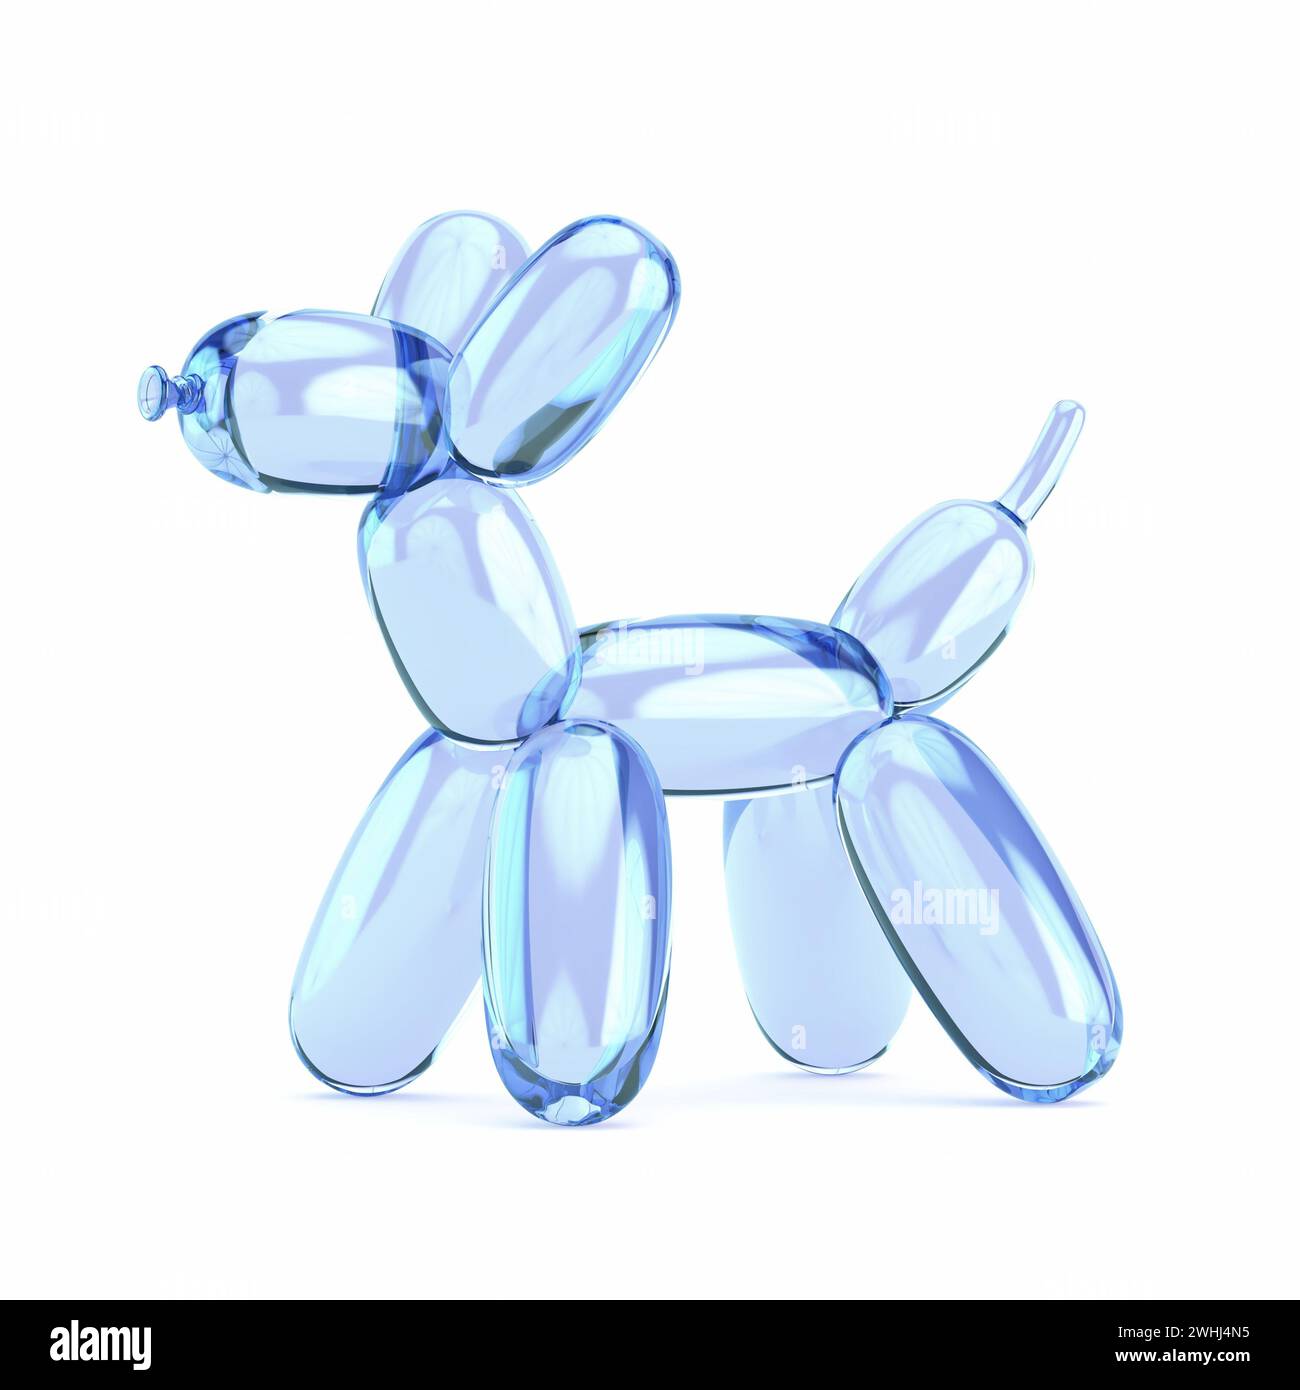 Blue transparent dog balloon 3D Stock Photo